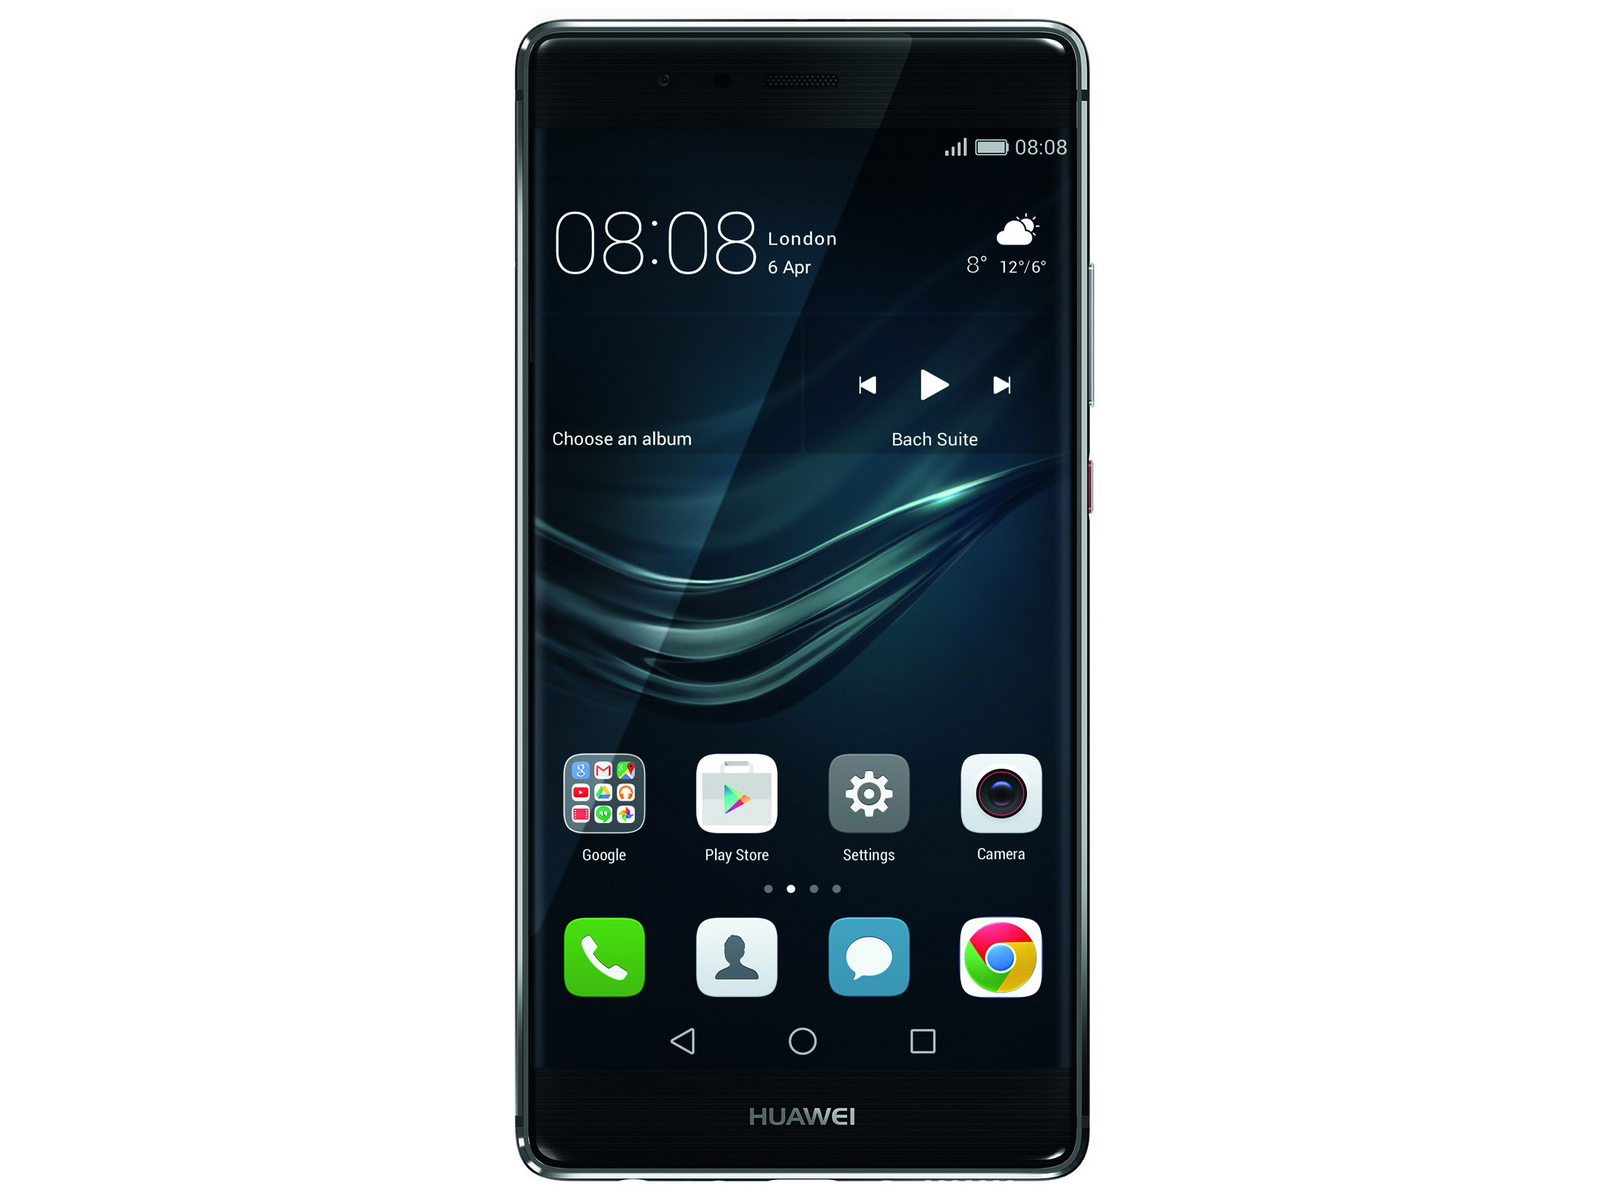 Huawei Smartphone Review - NotebookCheck.net